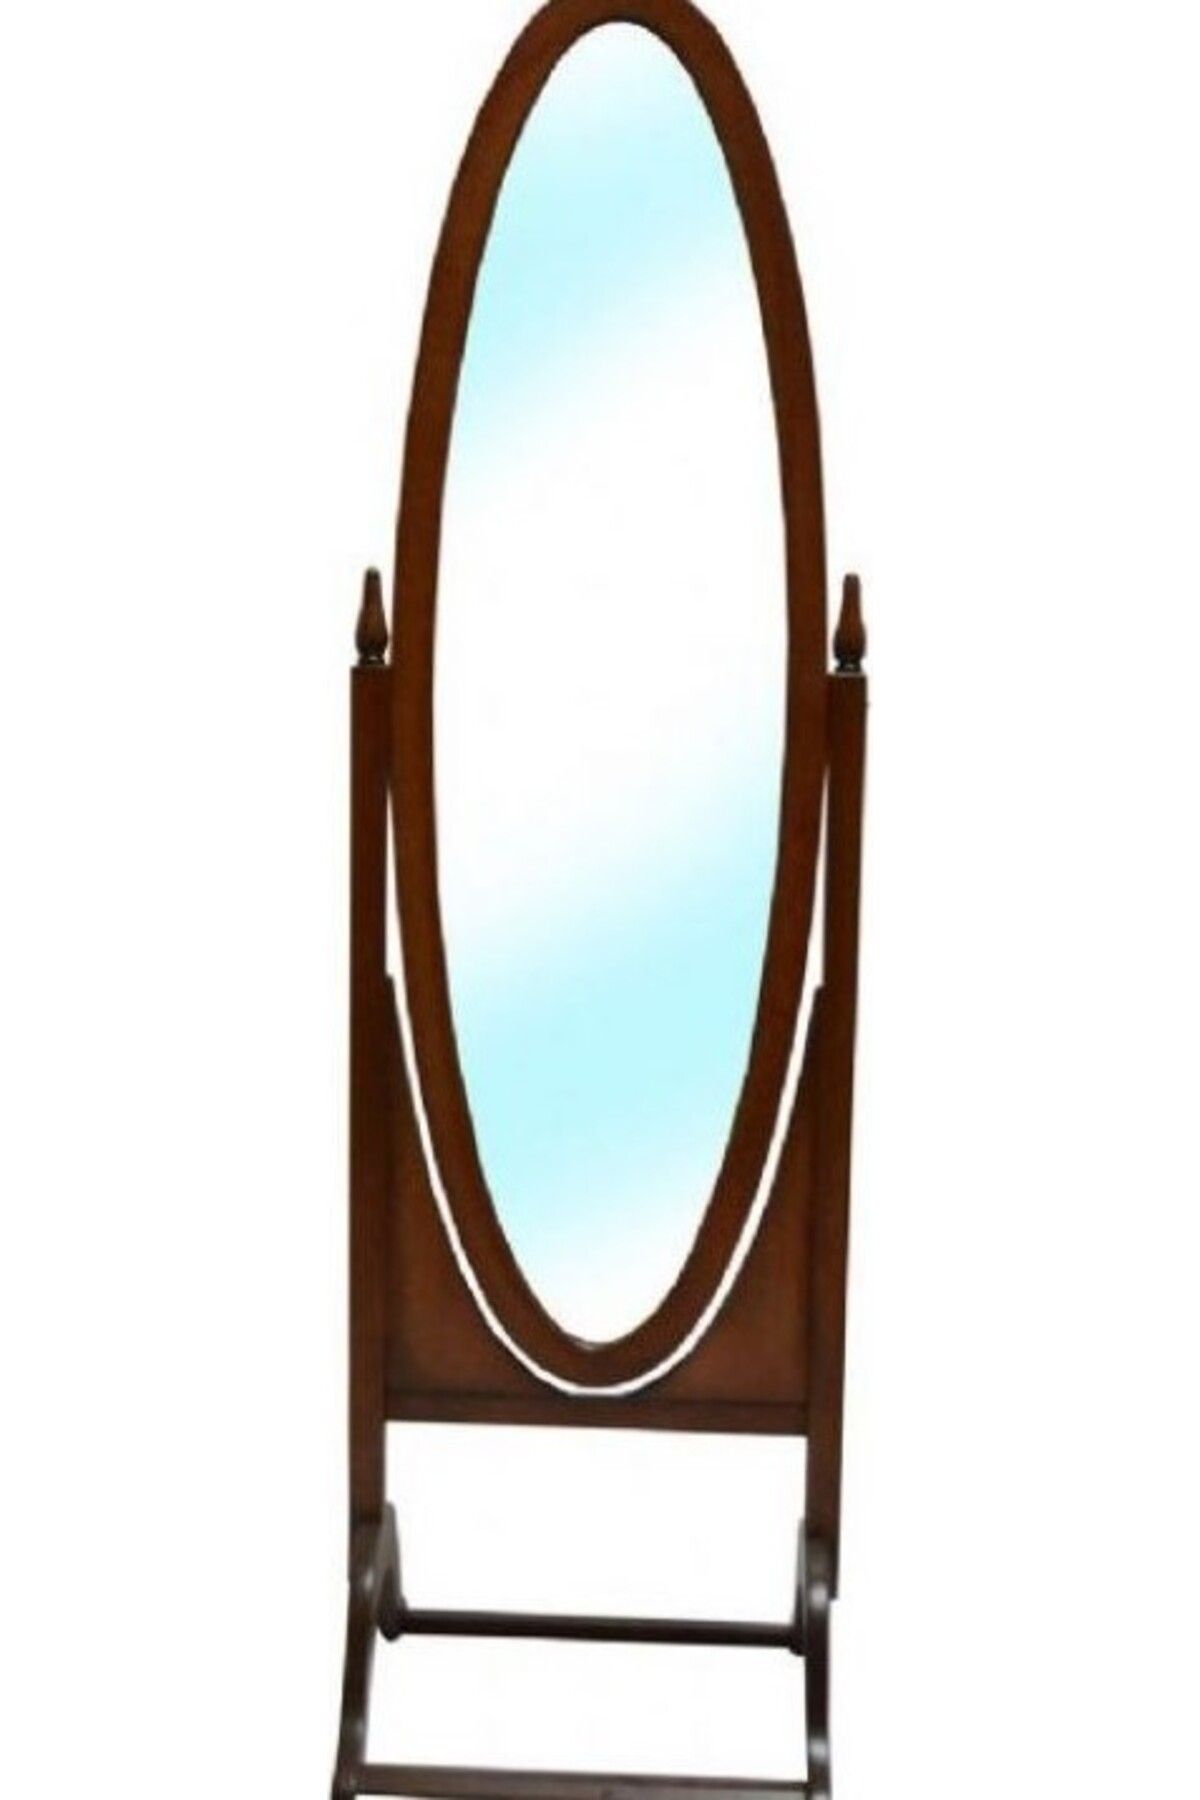 Ankara Mobilya Ayna St Oval Boy Ahşap Kayın Mdf Parlak Ceviz Natüre Boya Klasik Mobilya El Yapım